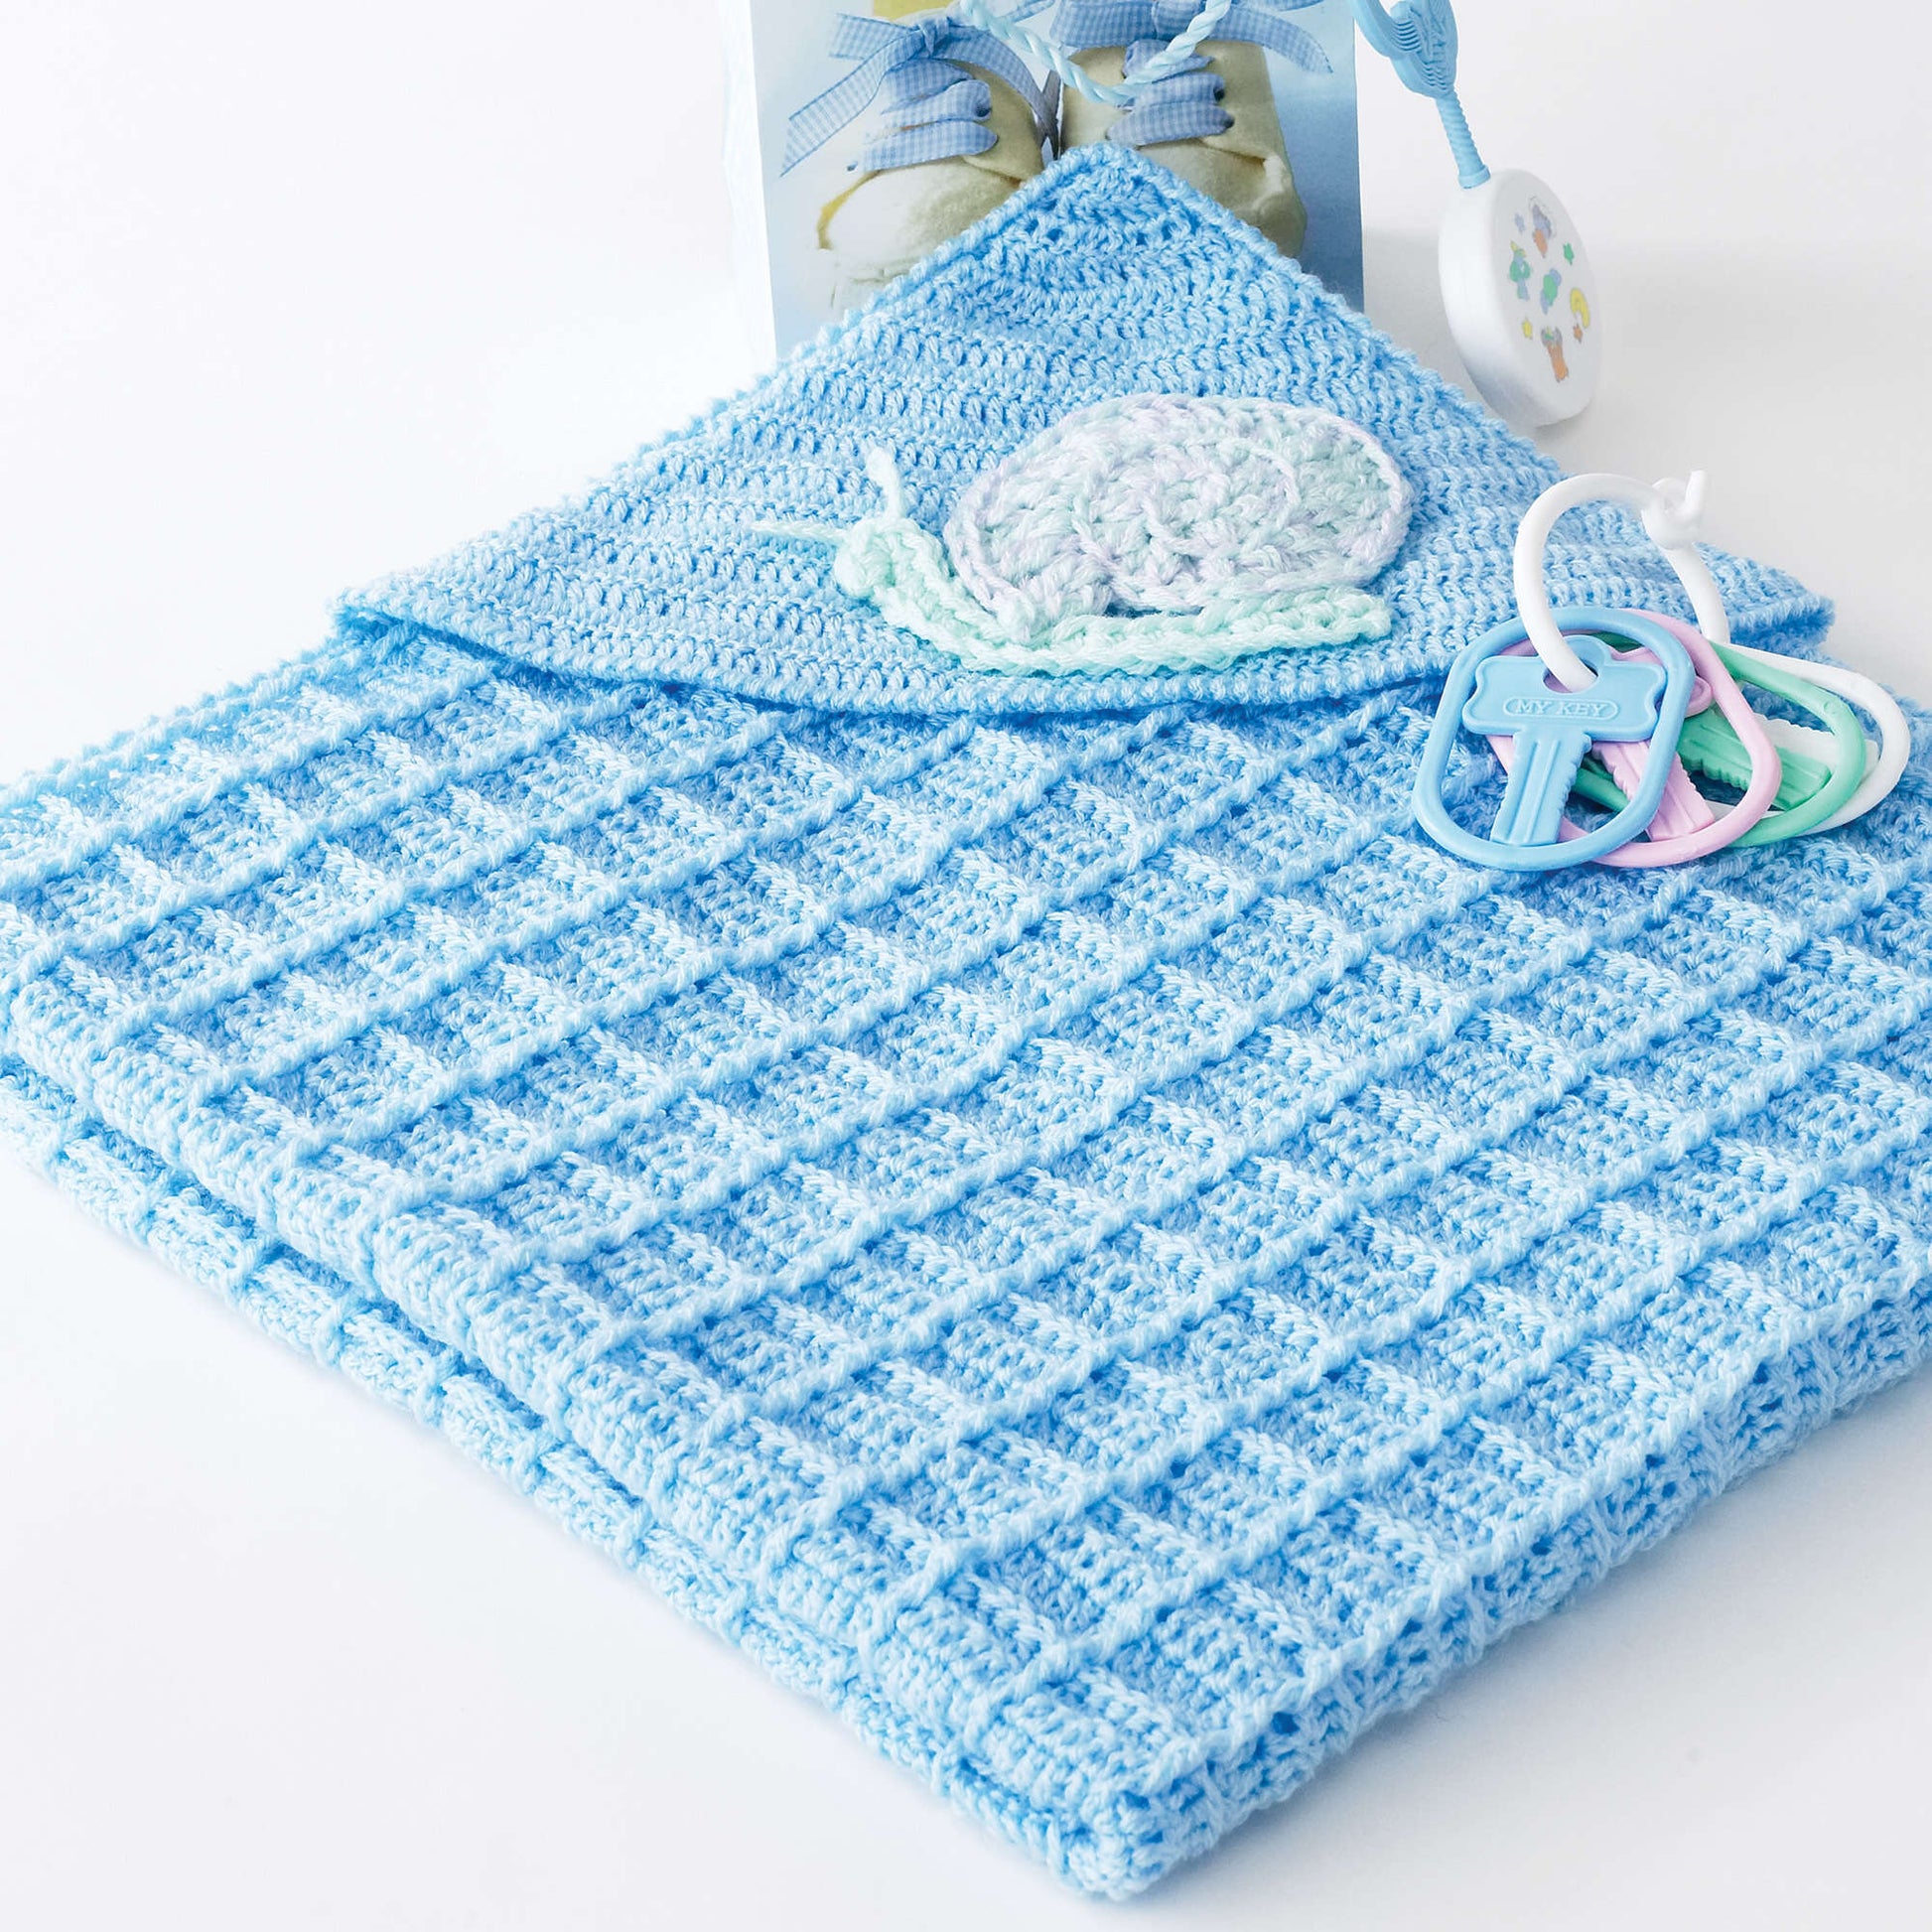 Bernat Snail Crochet Blanket Crochet Blanket made in Bernat Baby yarn